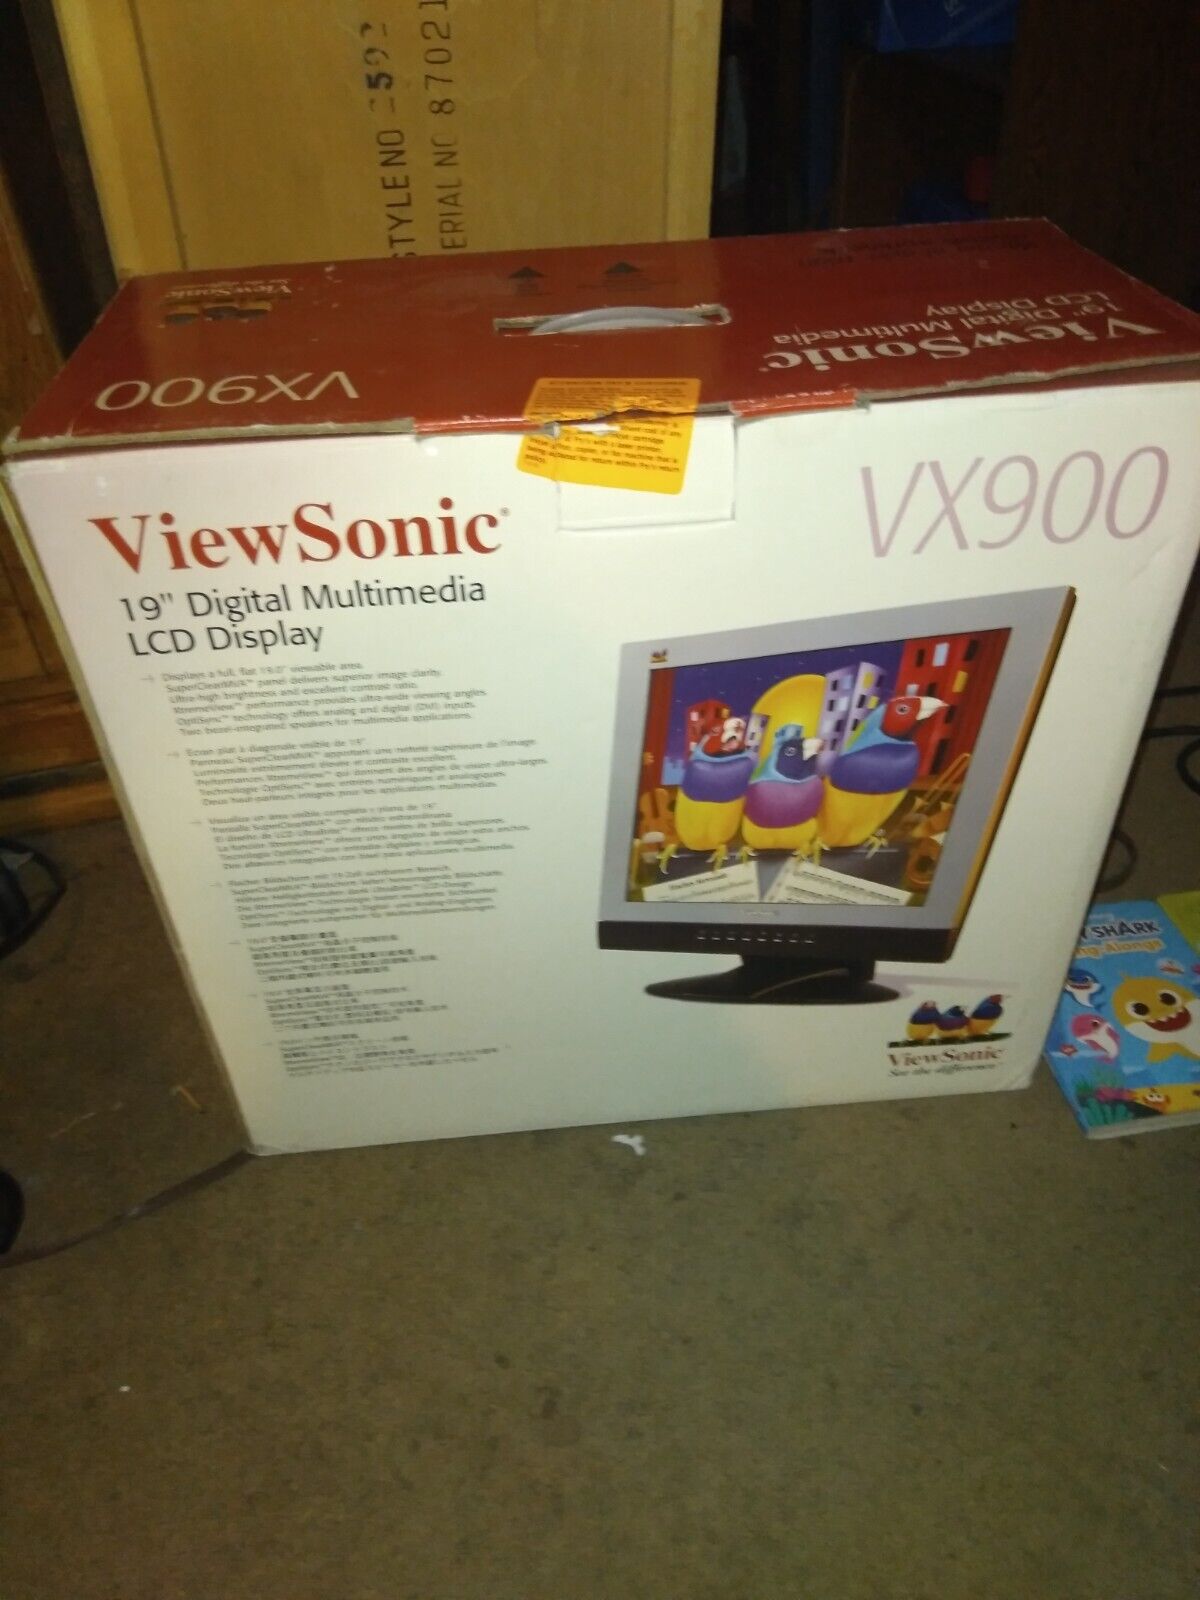 viewsonic VX900 19in digital multimedia lcd display VX900. 